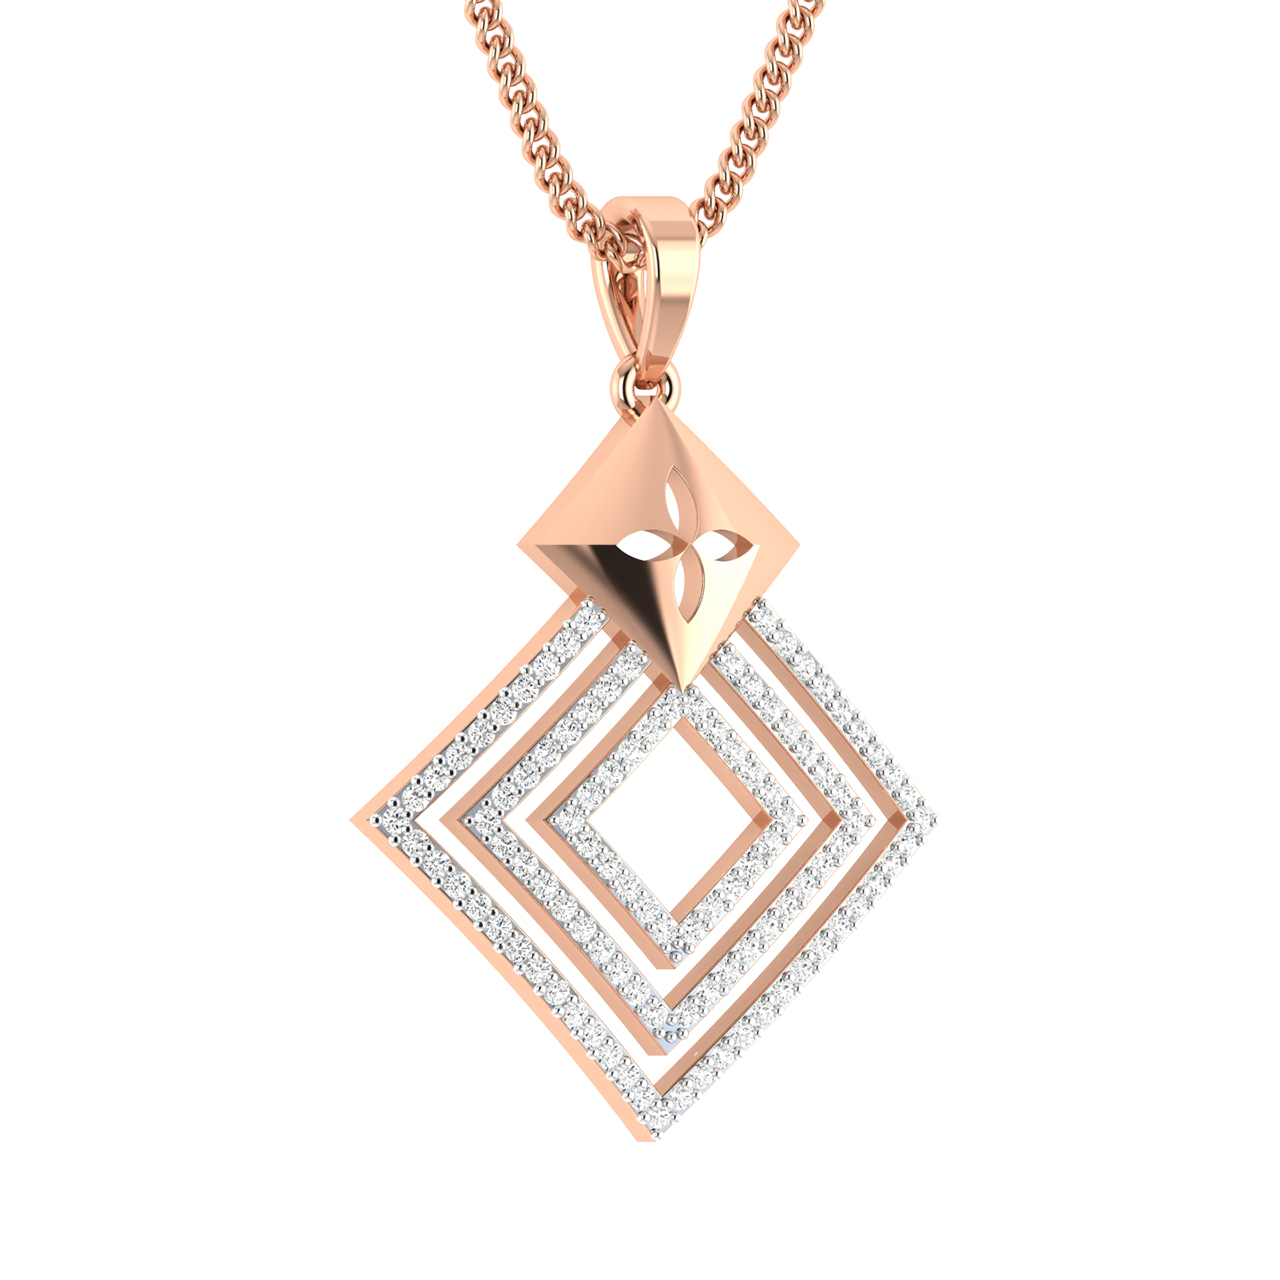 Triple Square Design Diamond Pendant